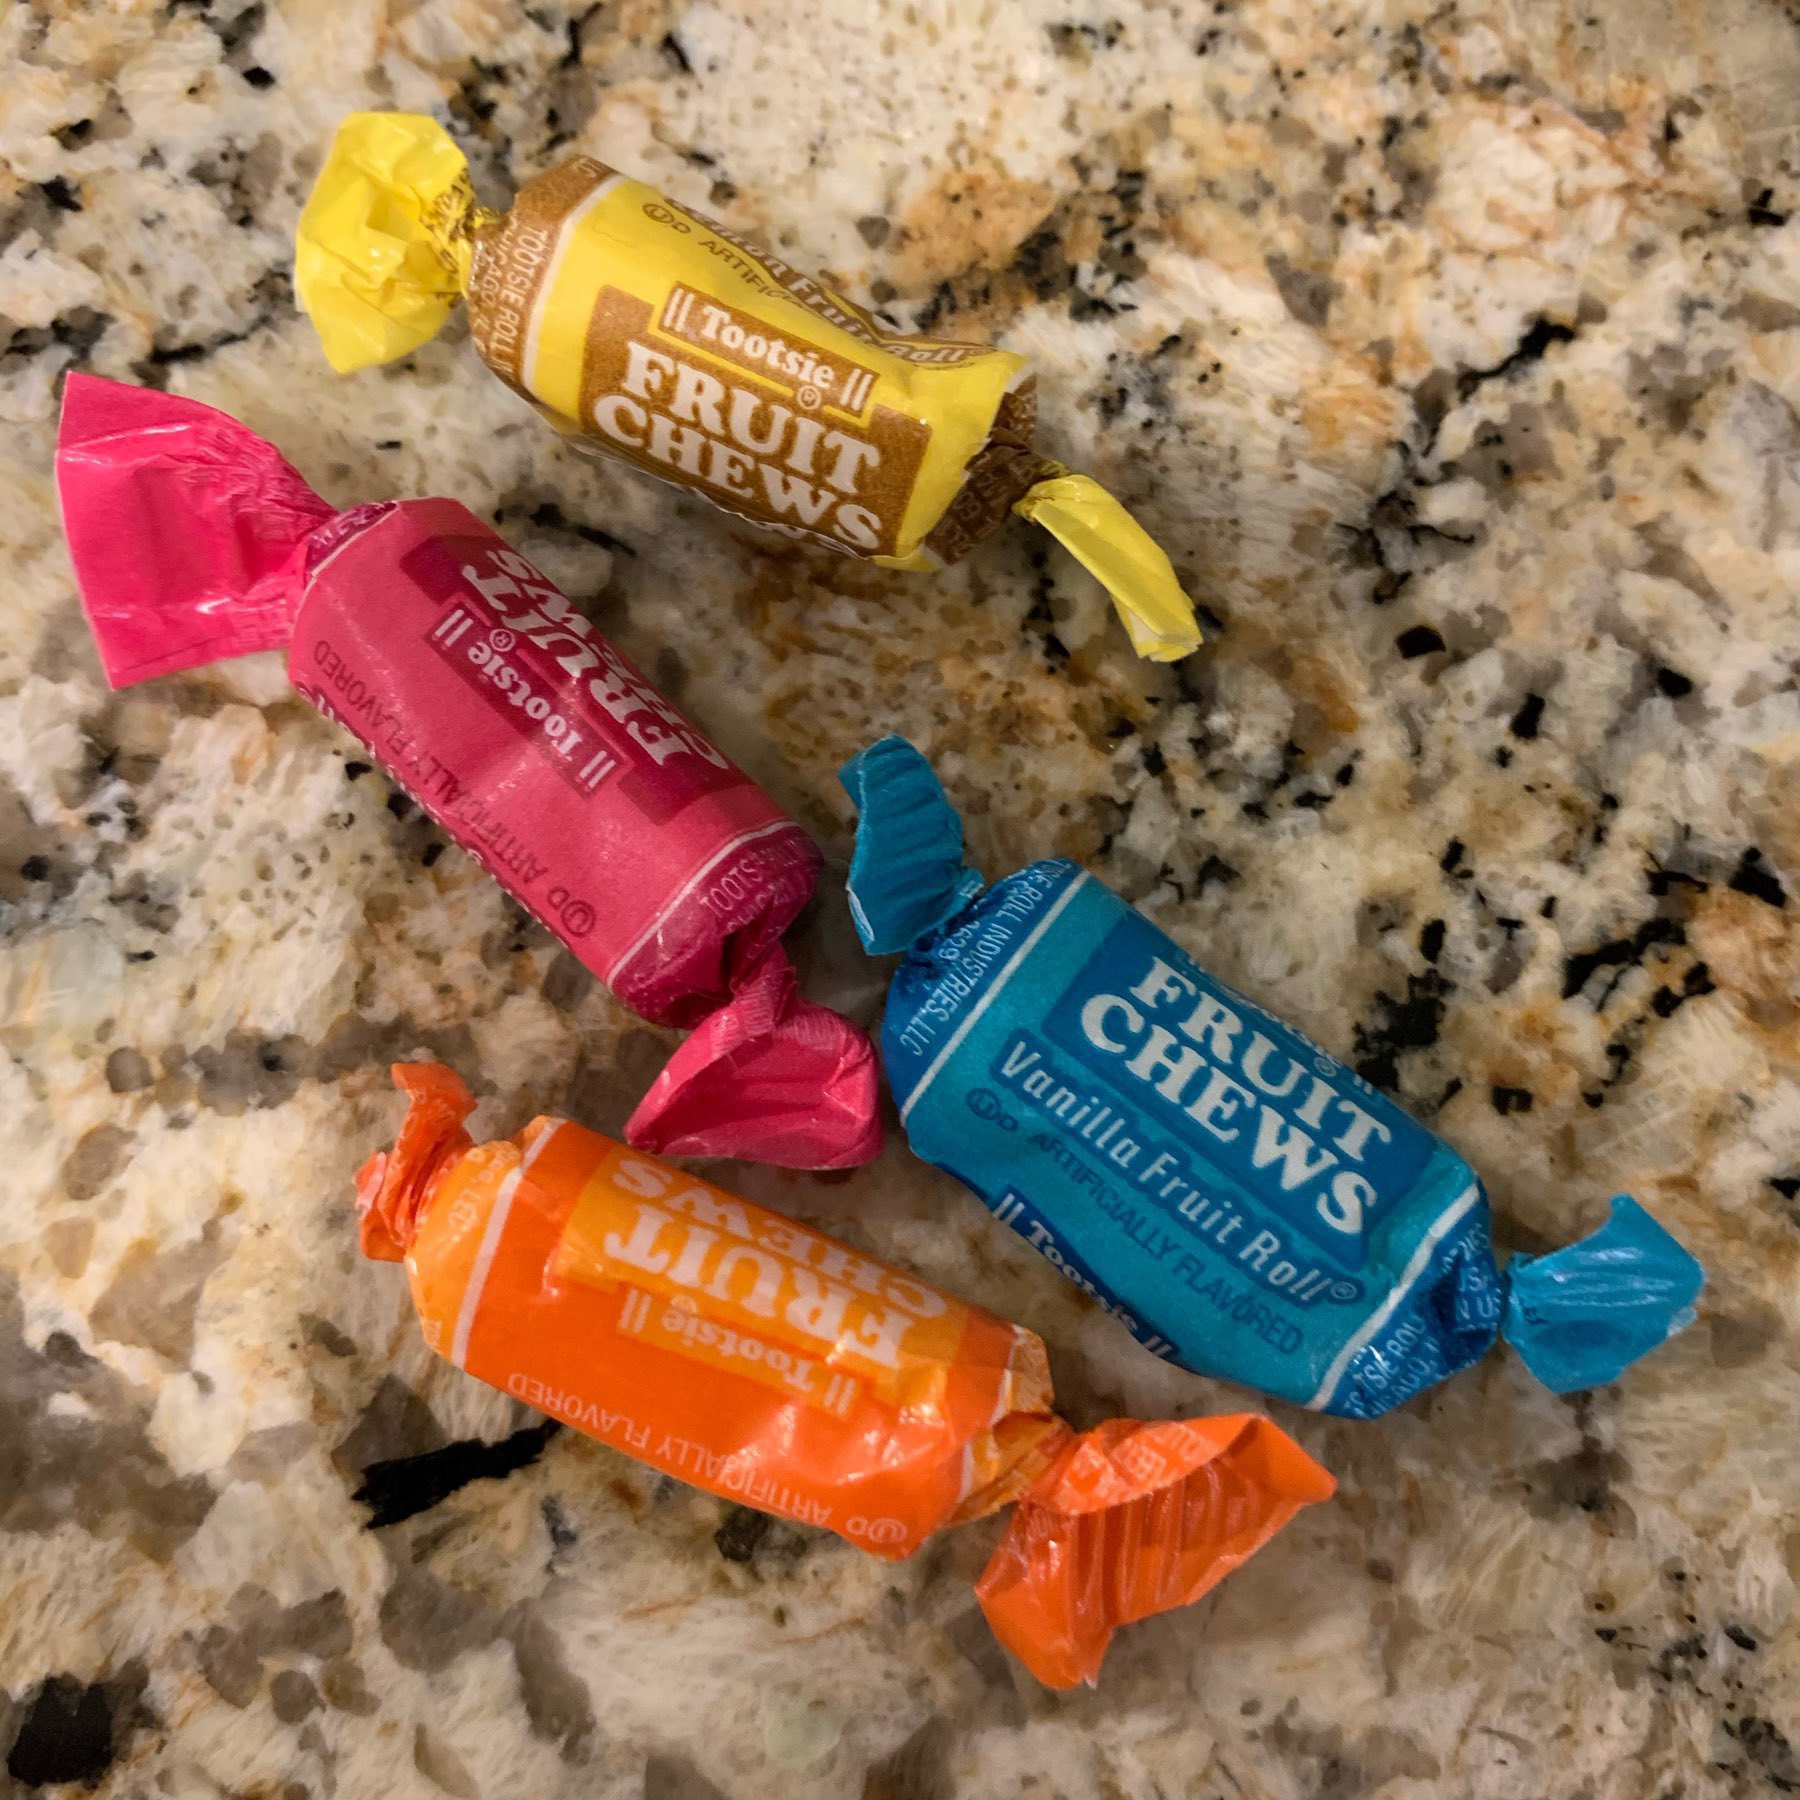 Four flavors of Tootsie Fruit Chews